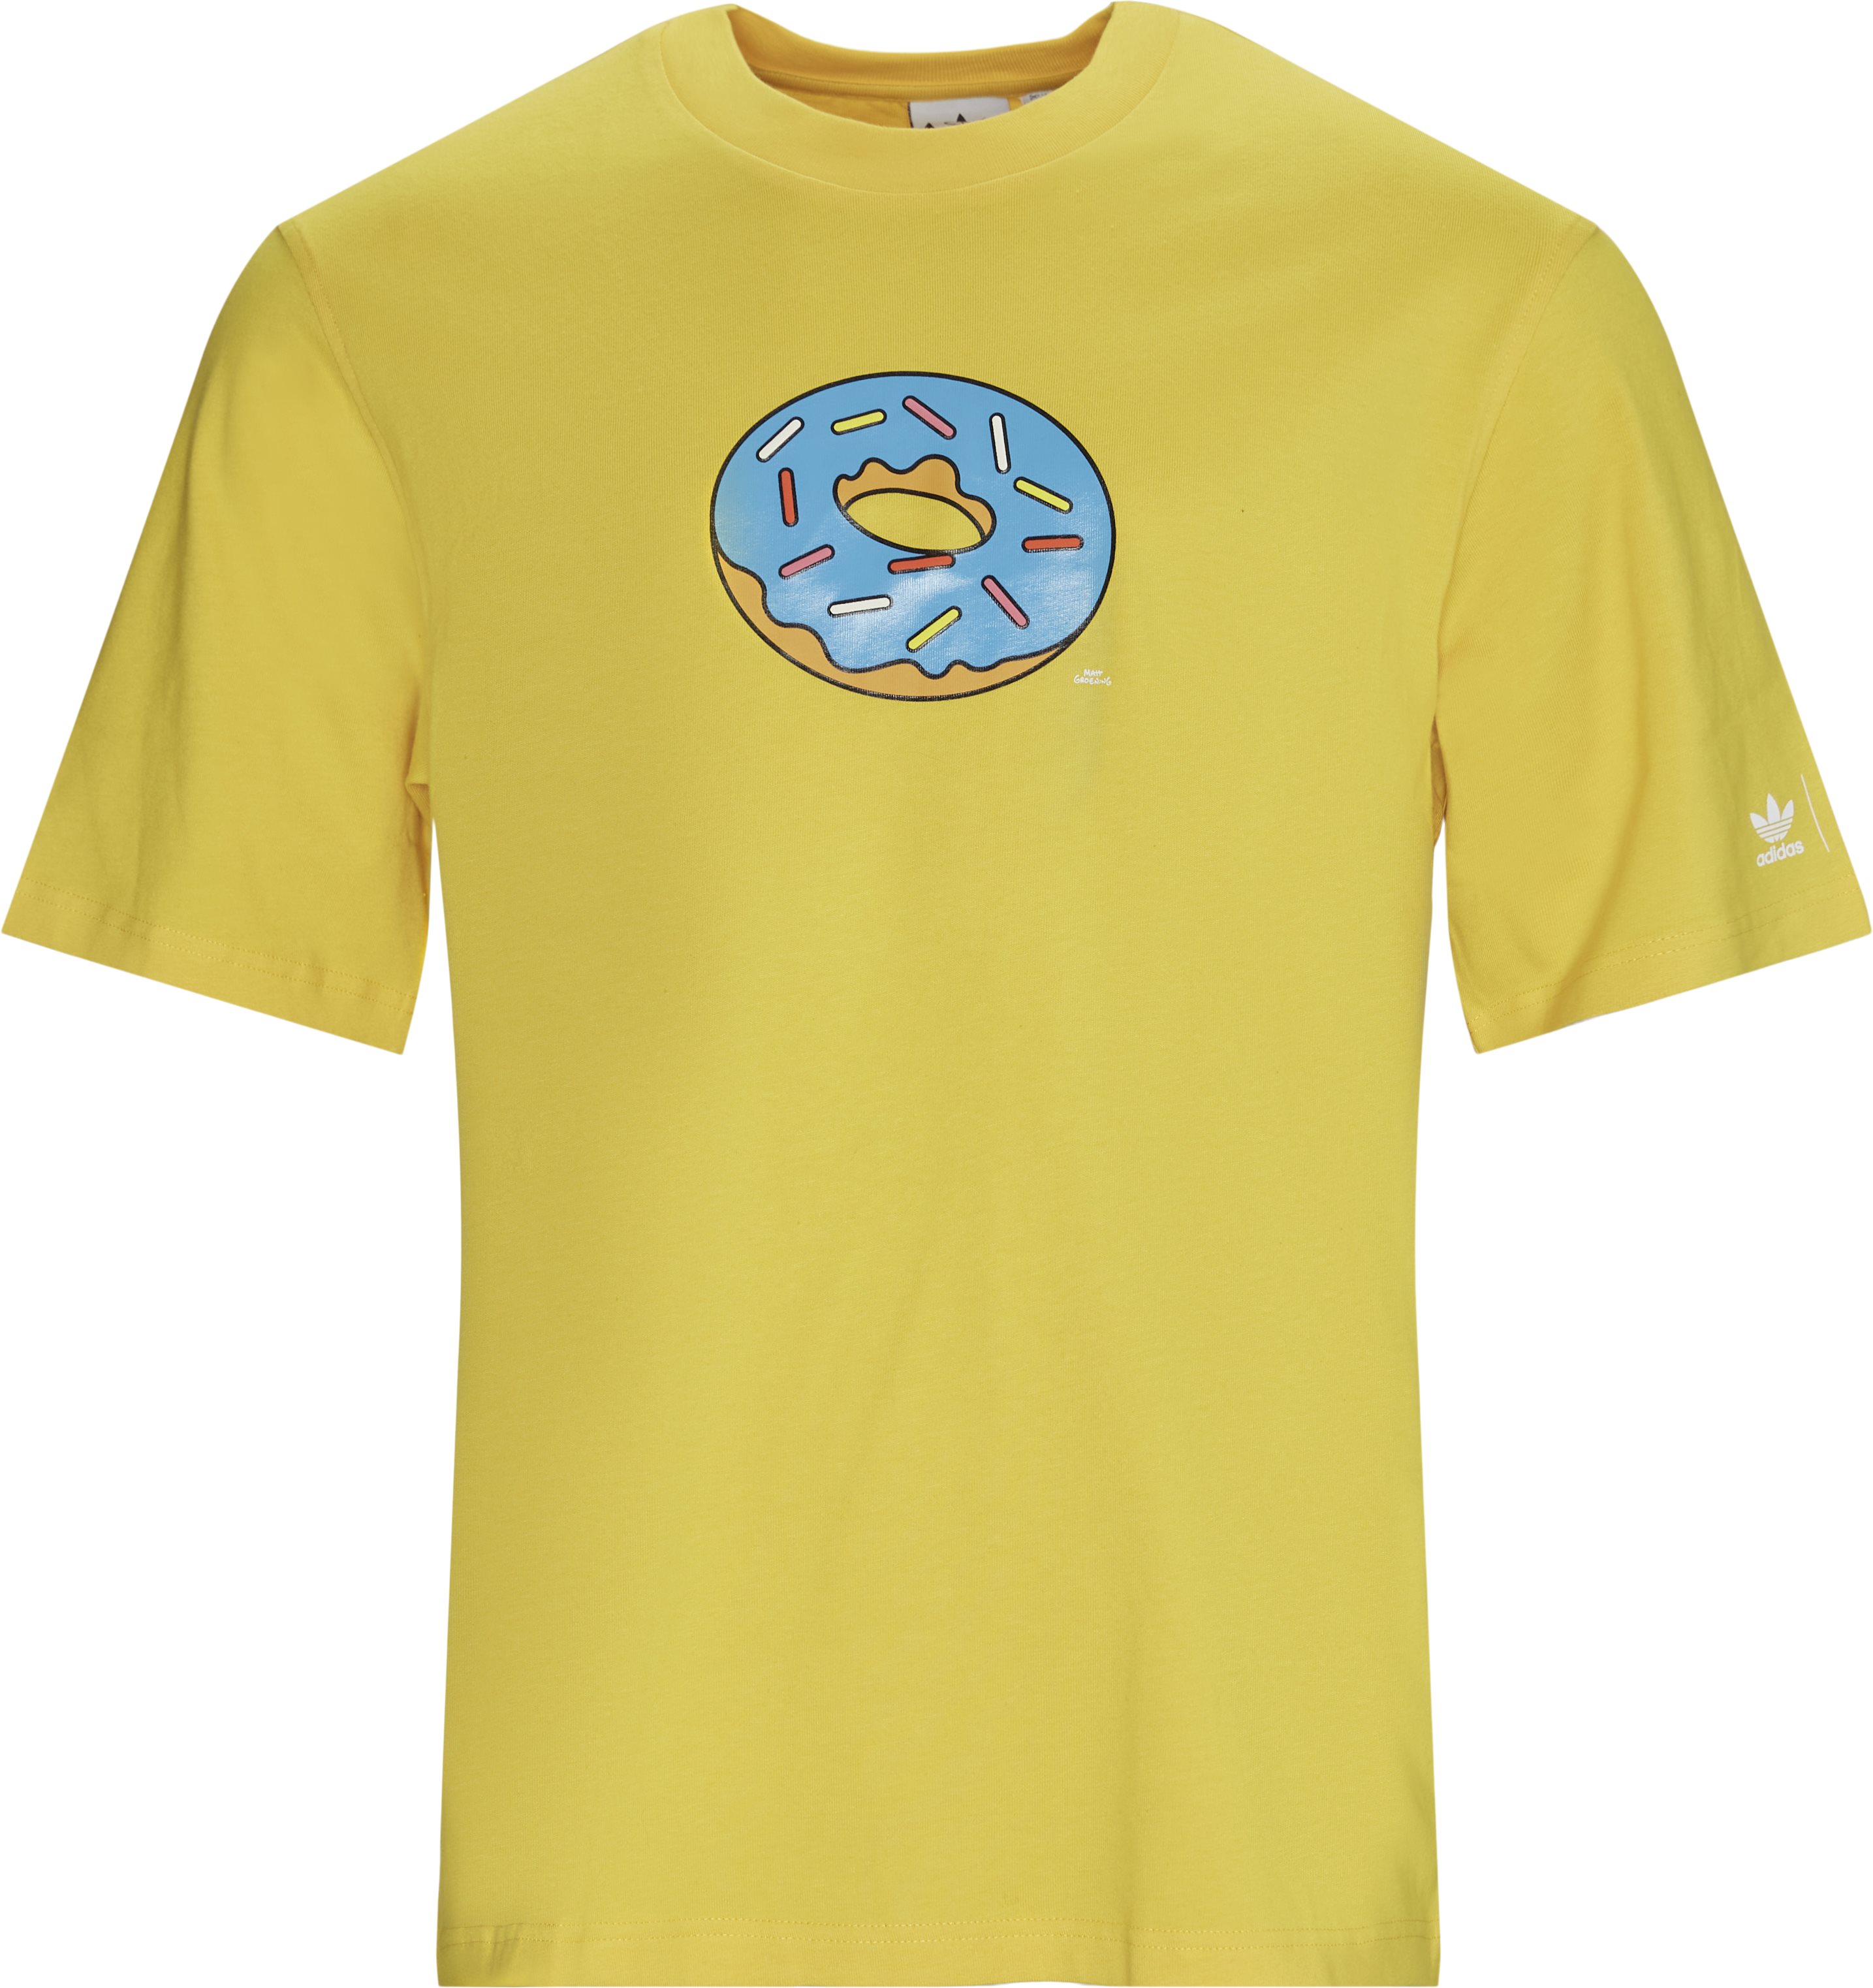 Simps Doh Tee - T-shirts - Regular fit - Yellow